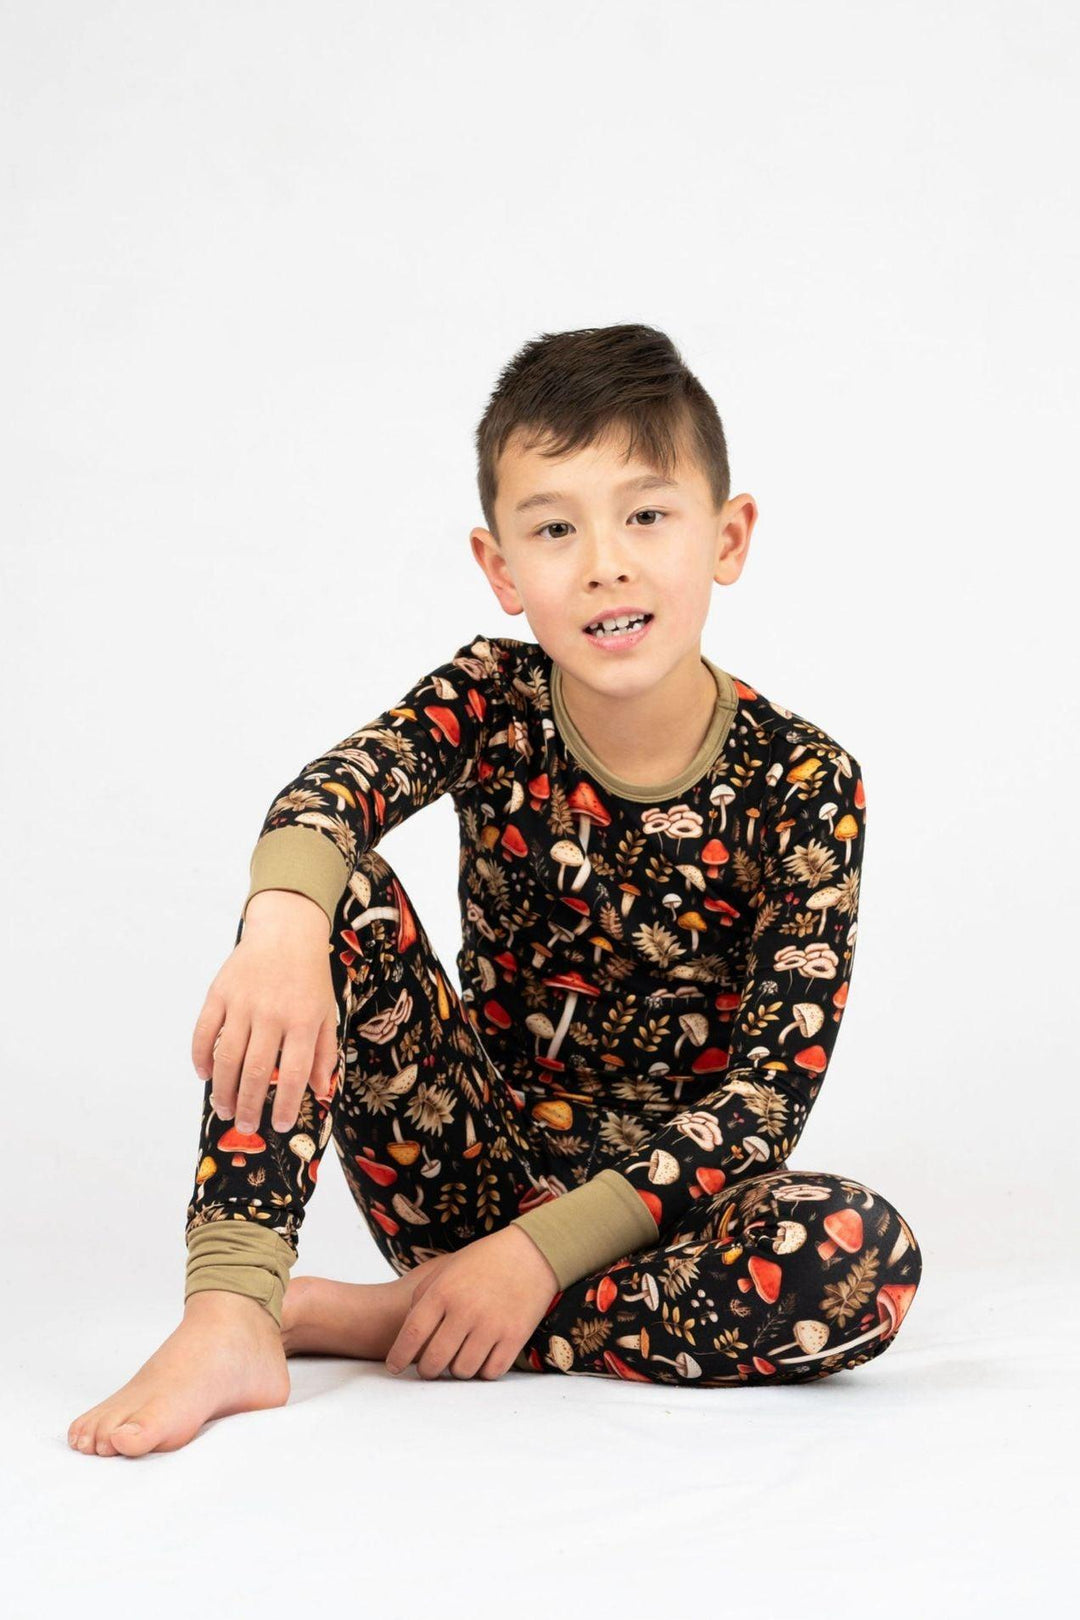 Toadstool Tales: Kids' Two-Piece Mushroom Bamboo Pajamas - Unisex - Sophia Rose Children's Boutique